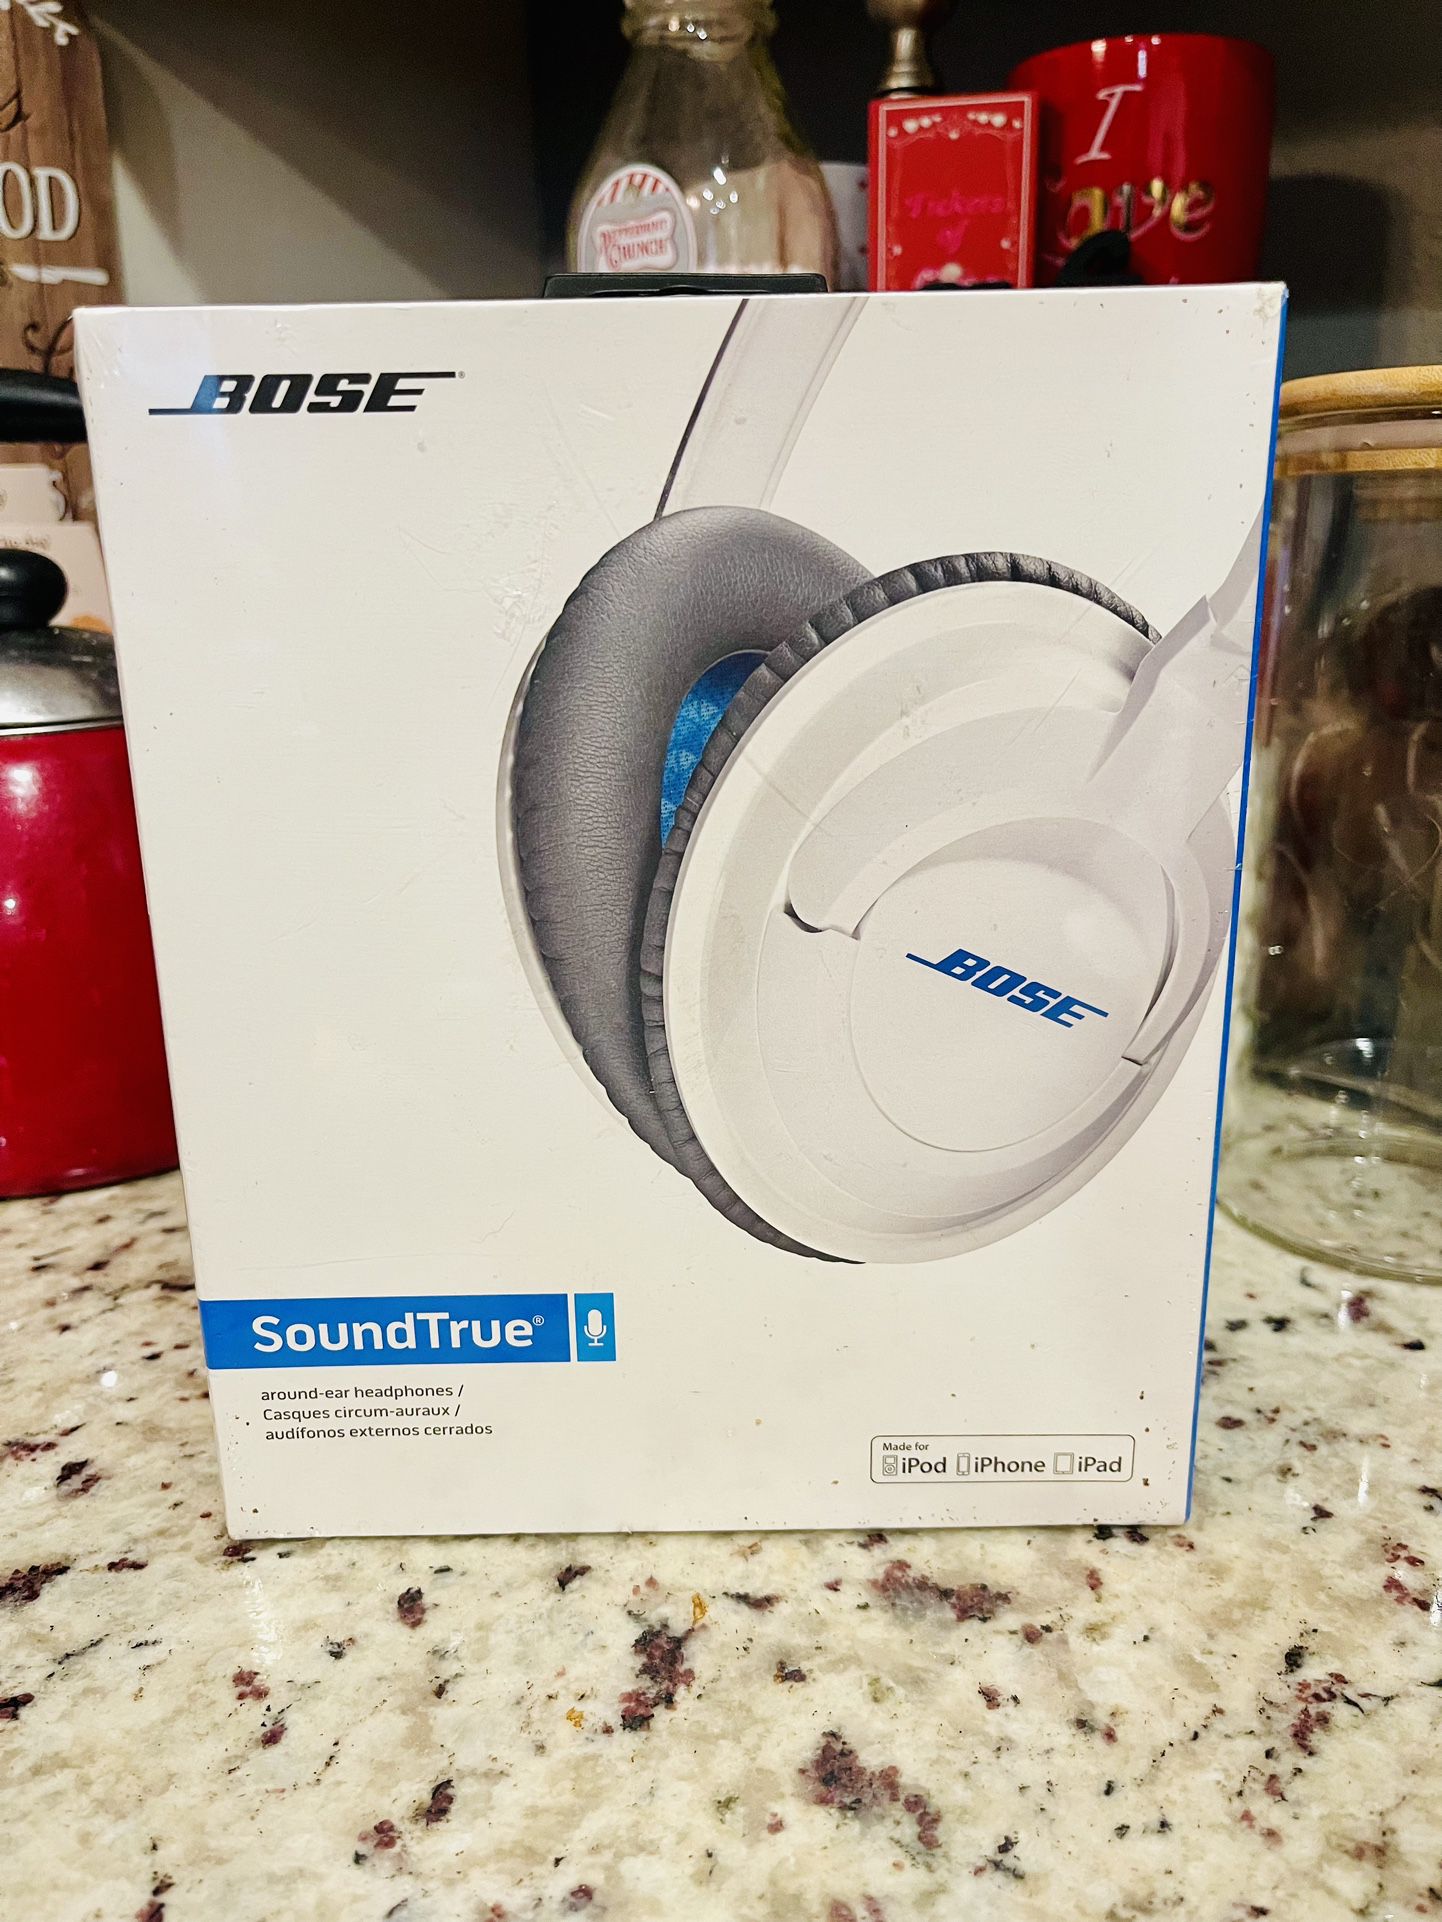 BOSE Sound True Around The Ear Headphones $50